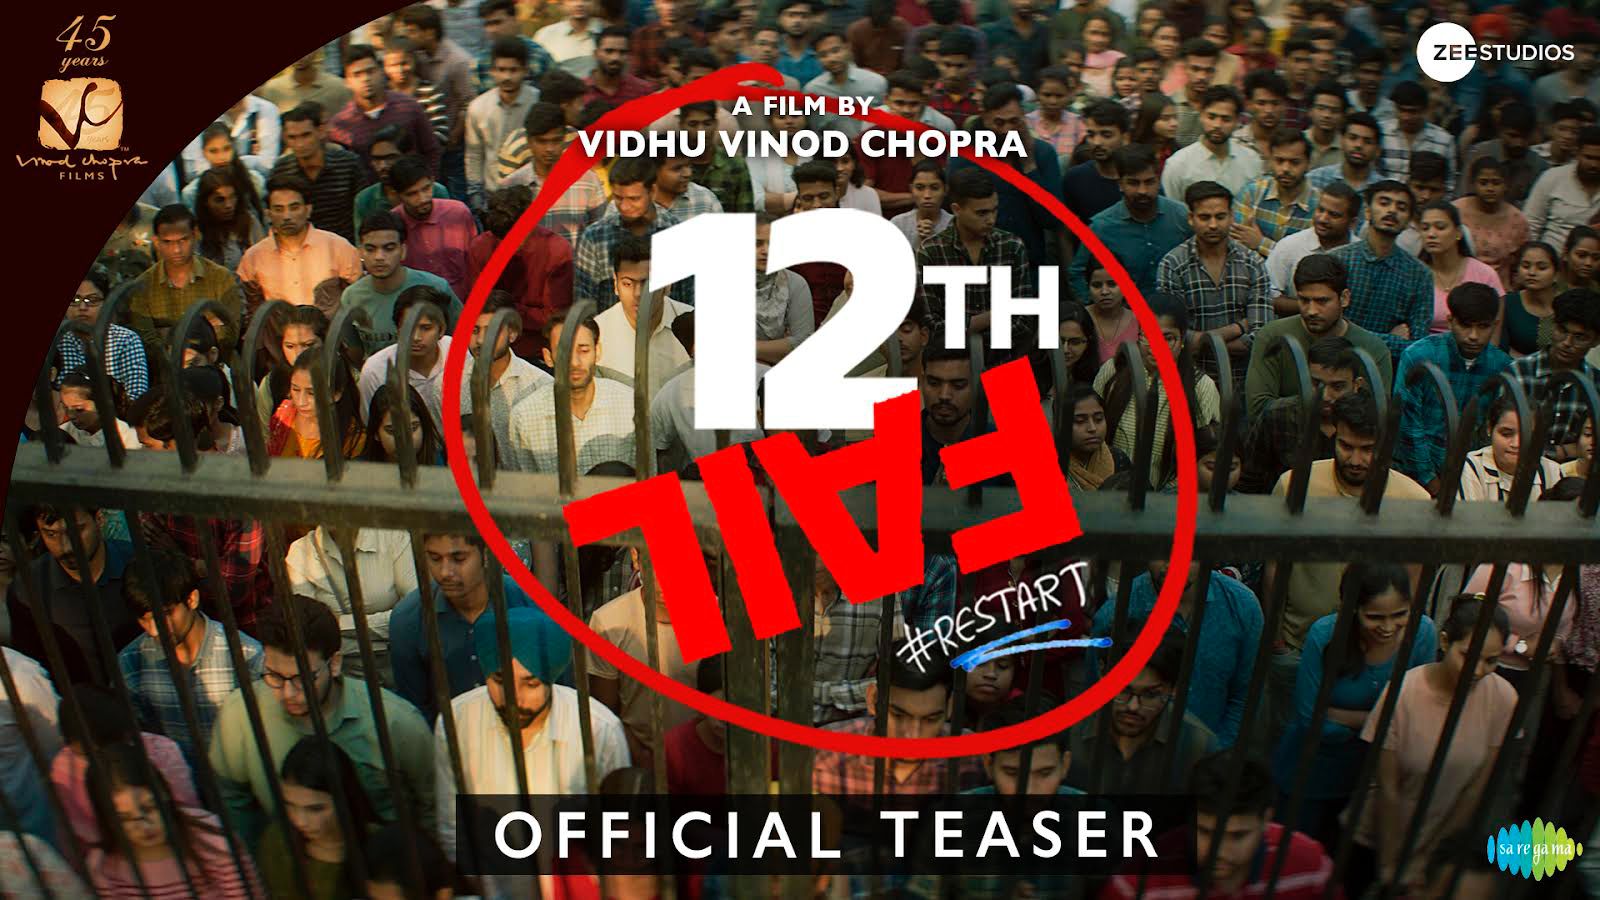 Vidhu Vinod Chopra’s 12th Fail teaser scores millions of views in record time!